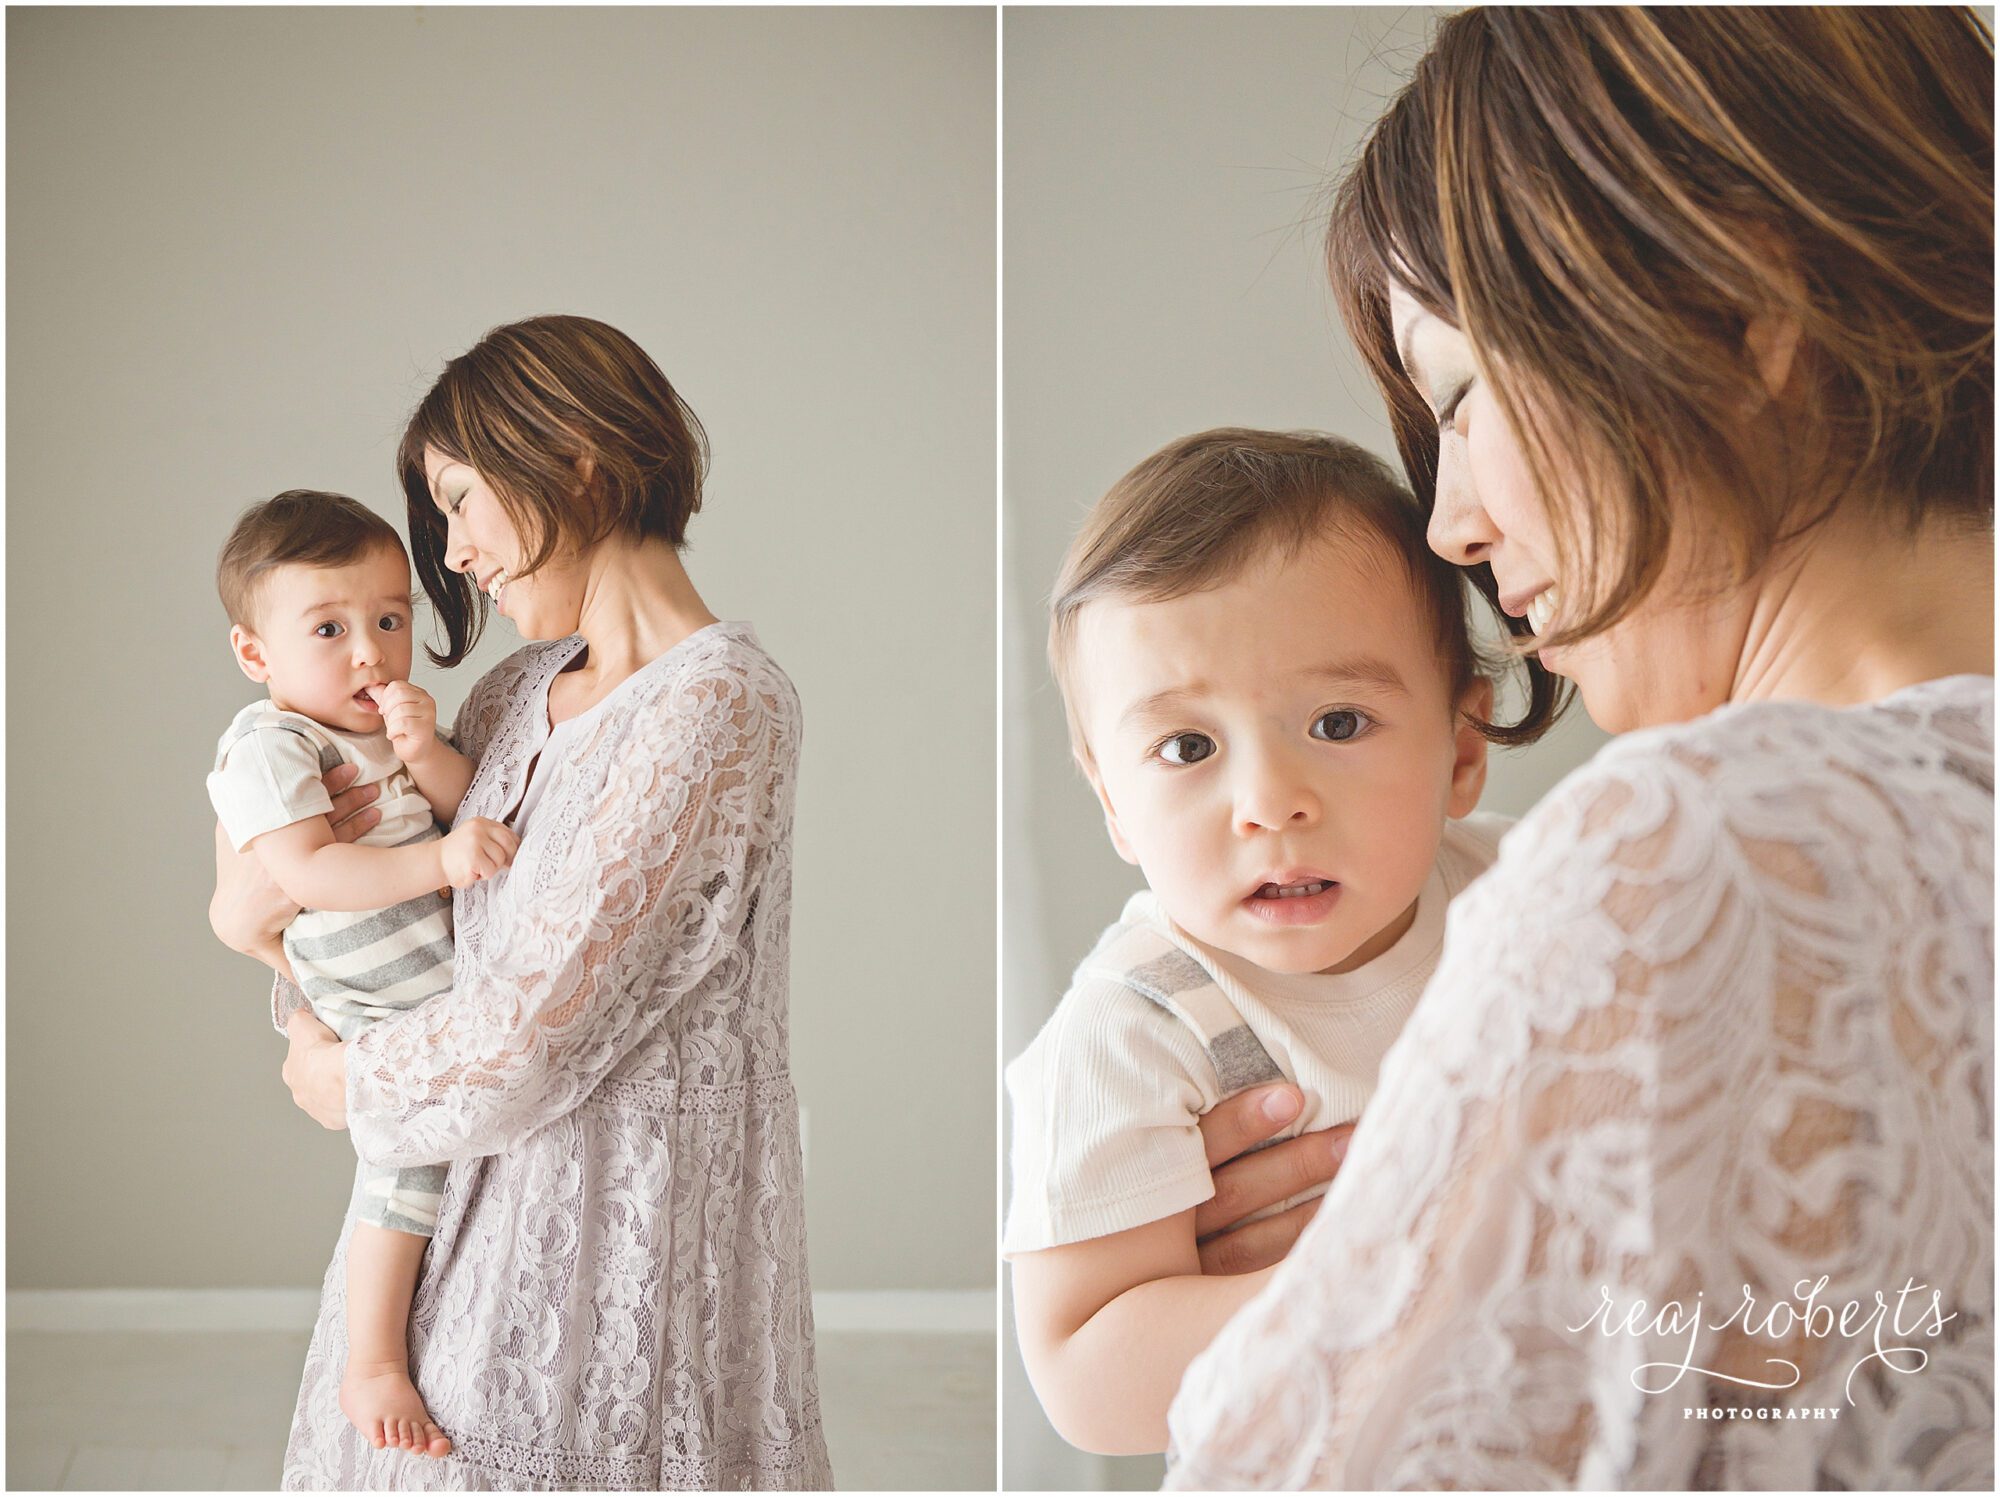 Motherhood photographer | Reaj Roberts Photography